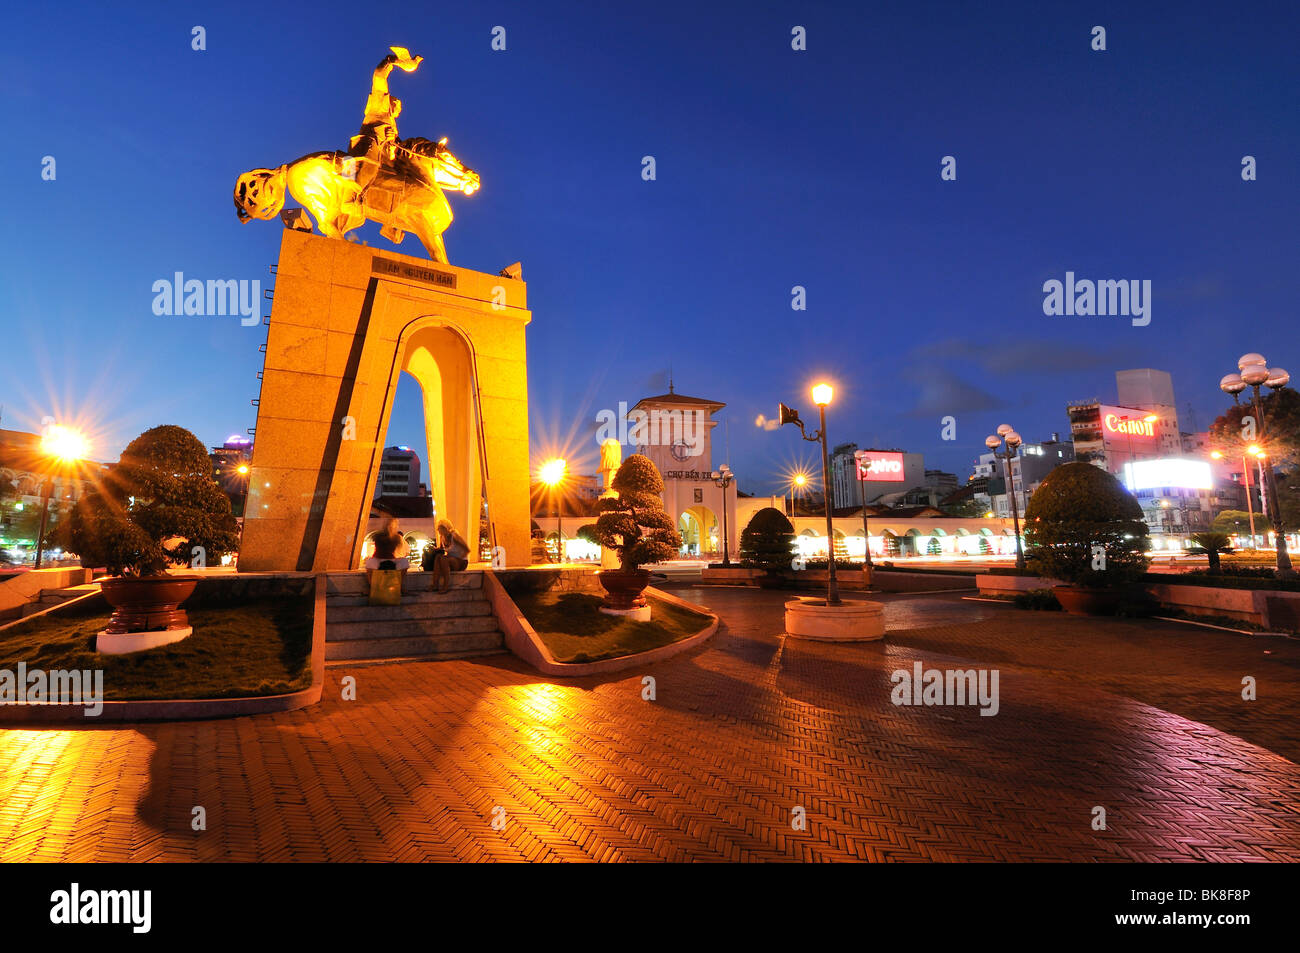 Monument, Statue of Tran Nguyen Hai, in the Ben Thanh market in Saigon, Night Scene, Vietnam, Asia Stock Photo